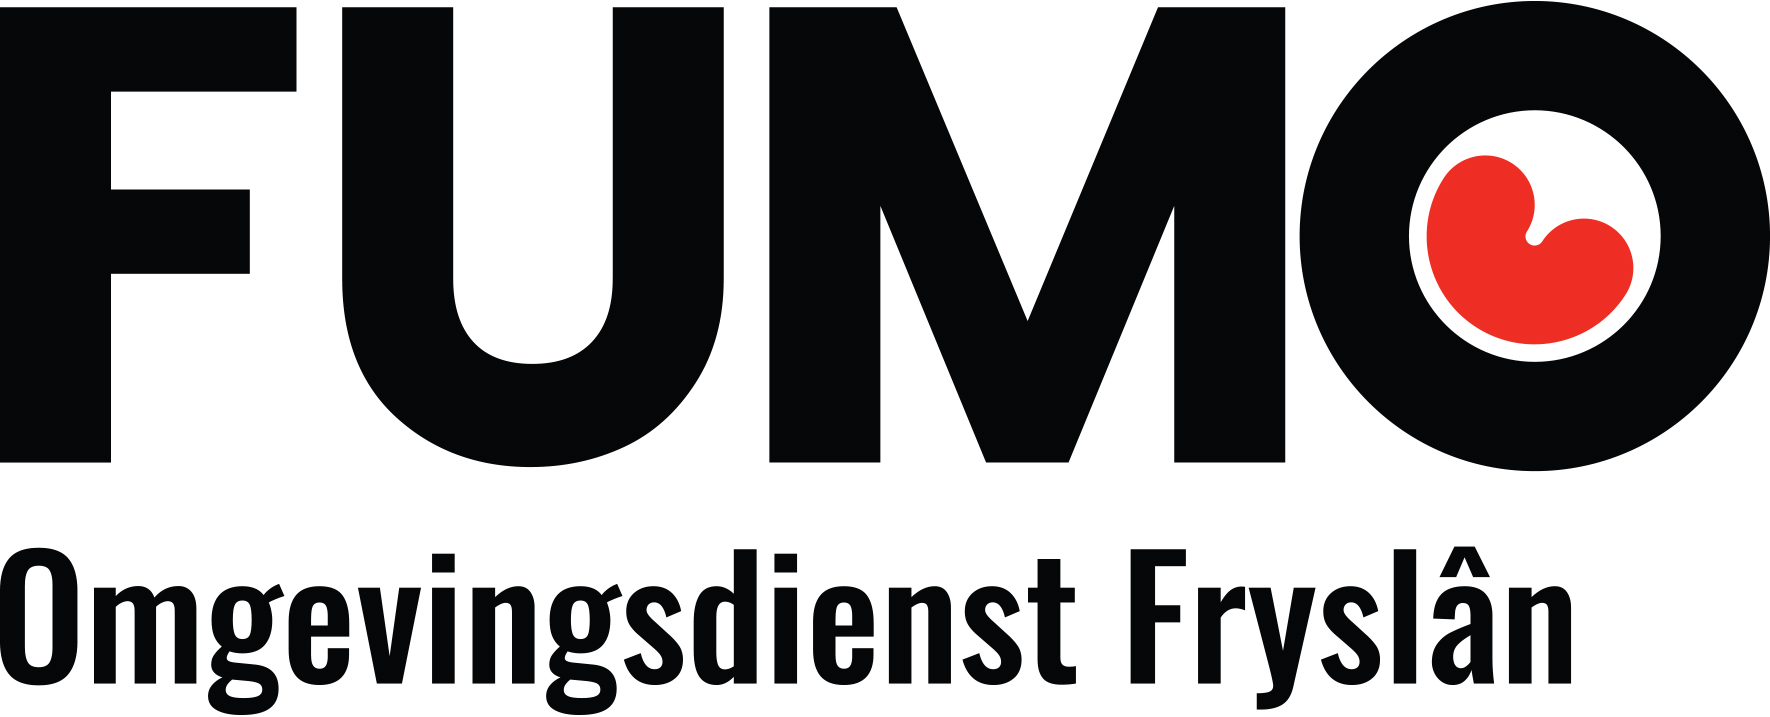 FUMO omgevingsdienst Fryslân logo zwart rood